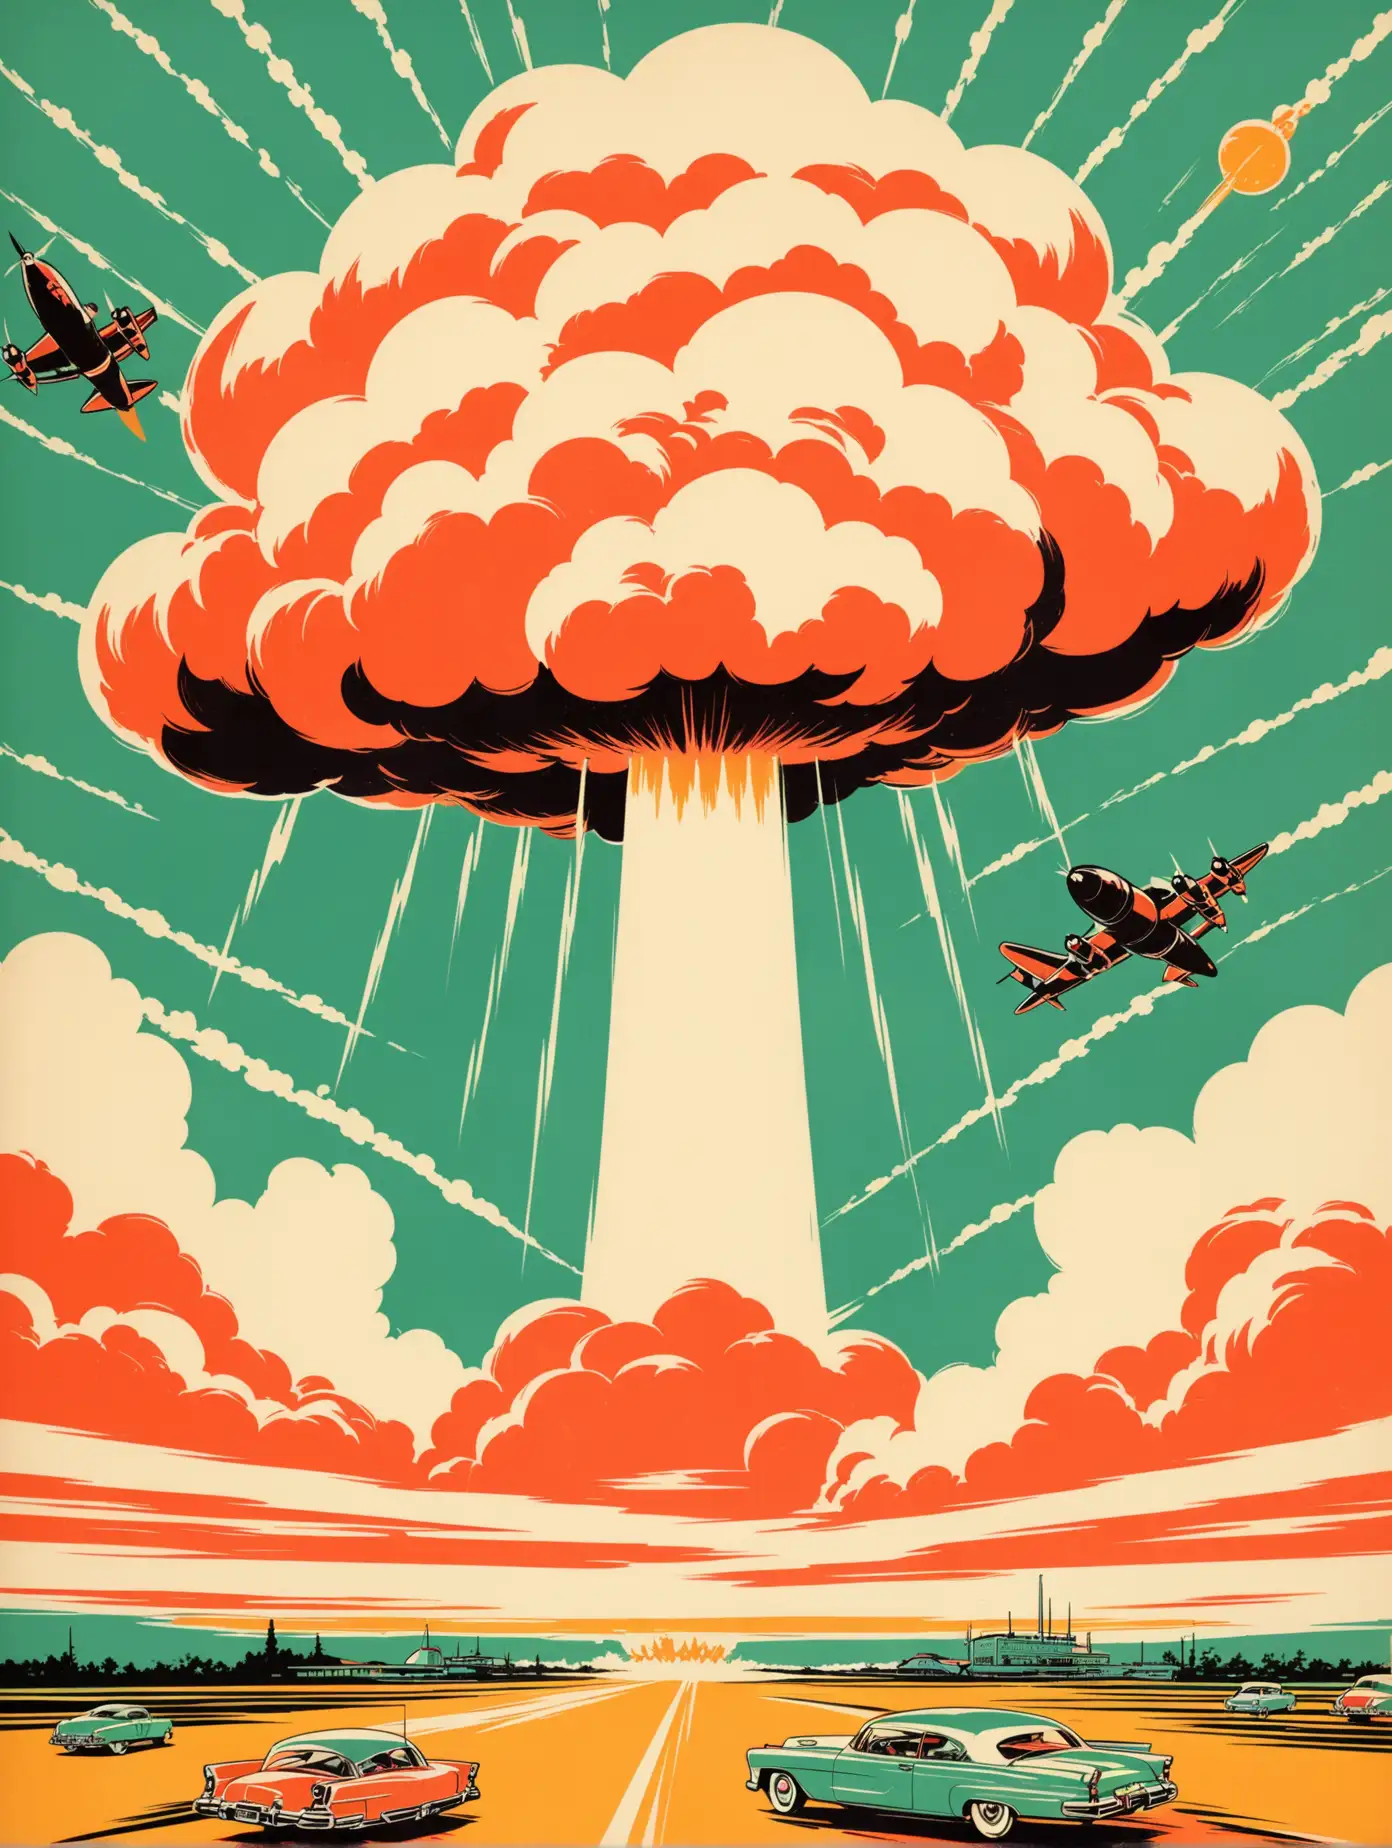 nuke cloud, bombs, mid- century modern nostalgia, cocktails, wallpaper, 